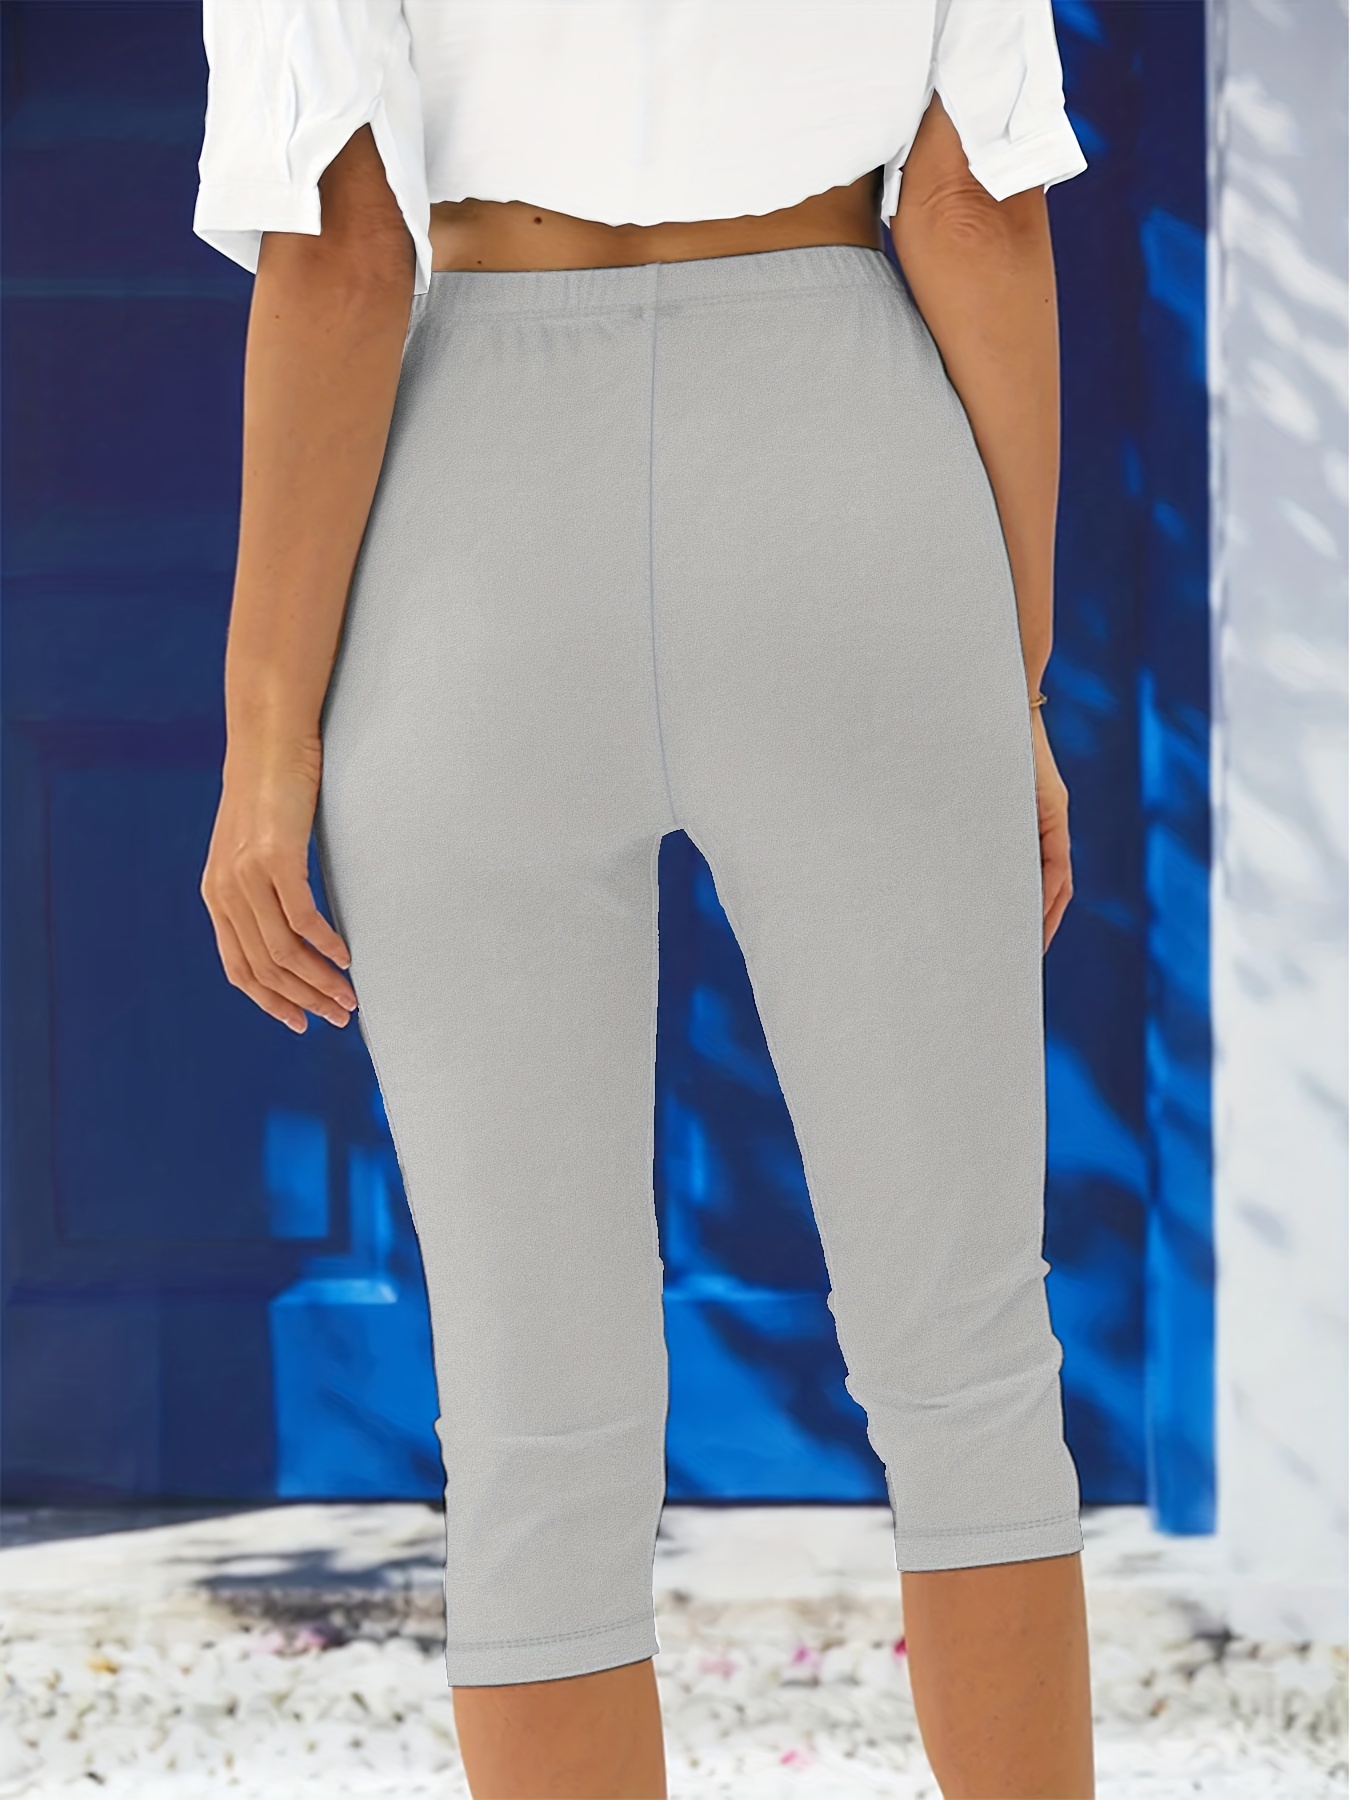 New Ladies Plus Size Capri Pants 3/4 Leggings Yoga Training Gym Leggings